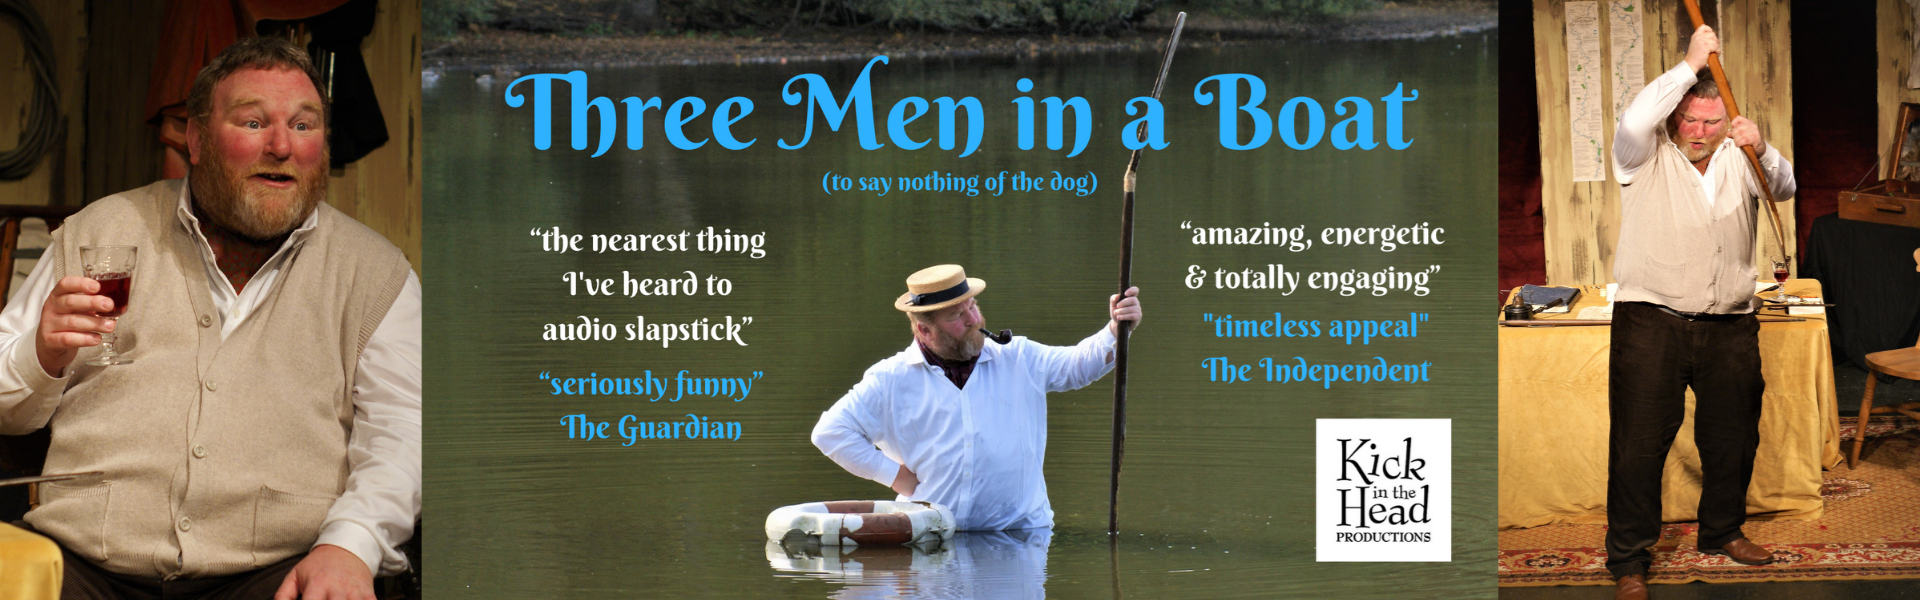 Outdoor Theatre - Three Men in a Boat